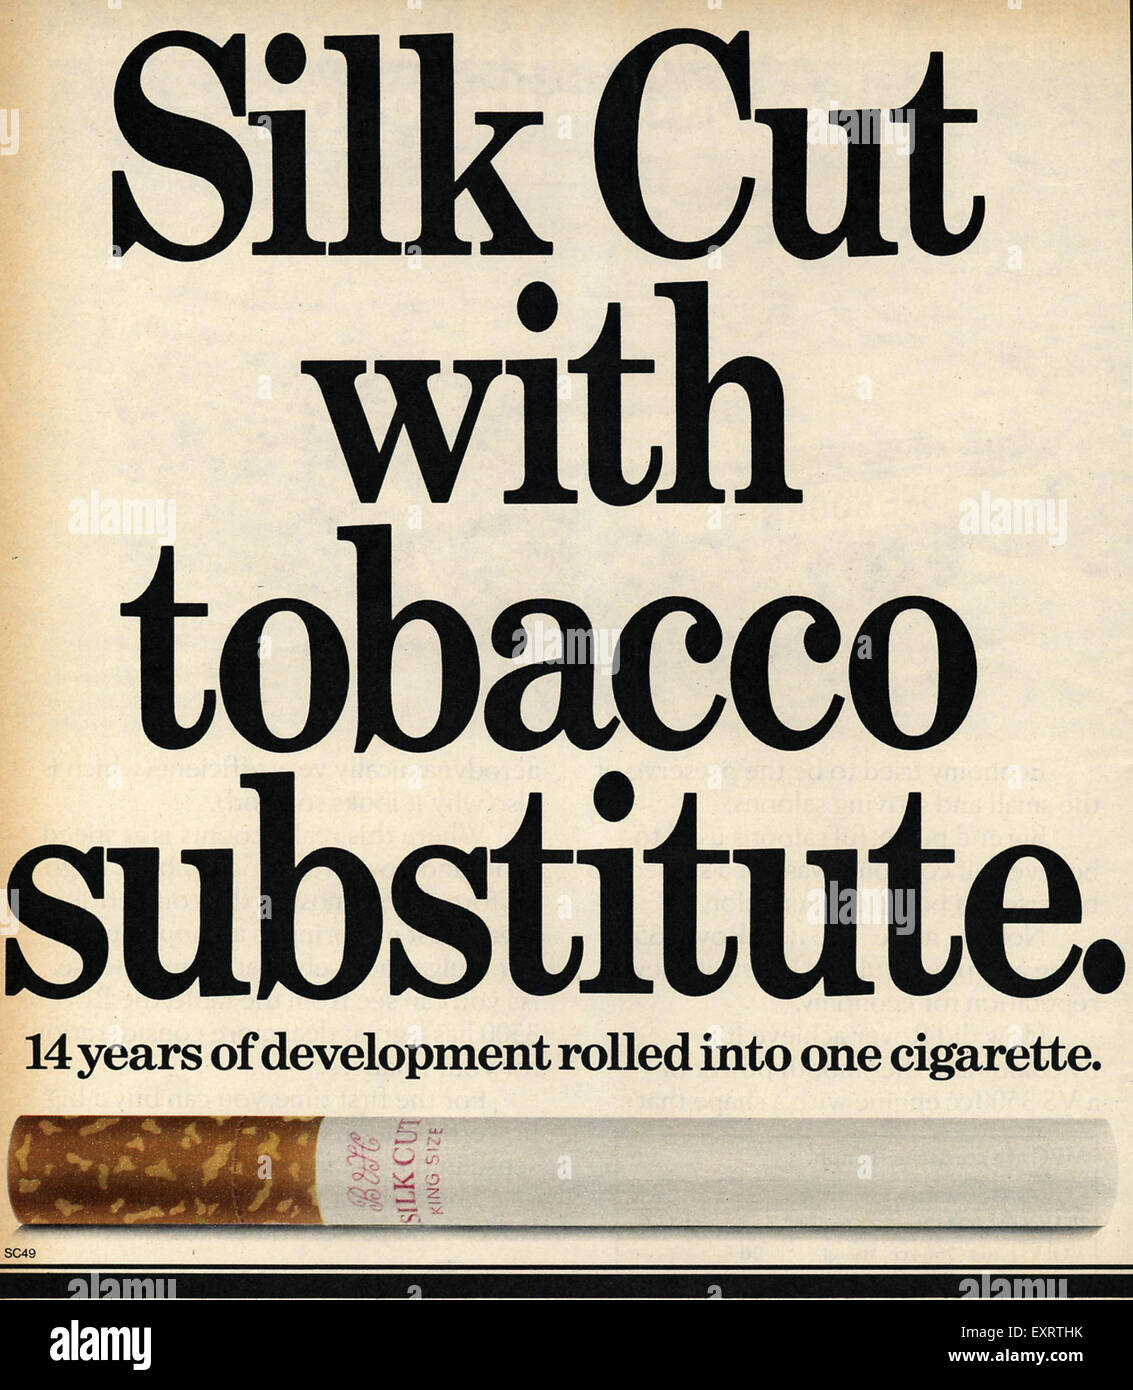 https://c8.alamy.com/comp/EXRTHK/1970s-uk-silk-cut-magazine-advert-EXRTHK.jpg